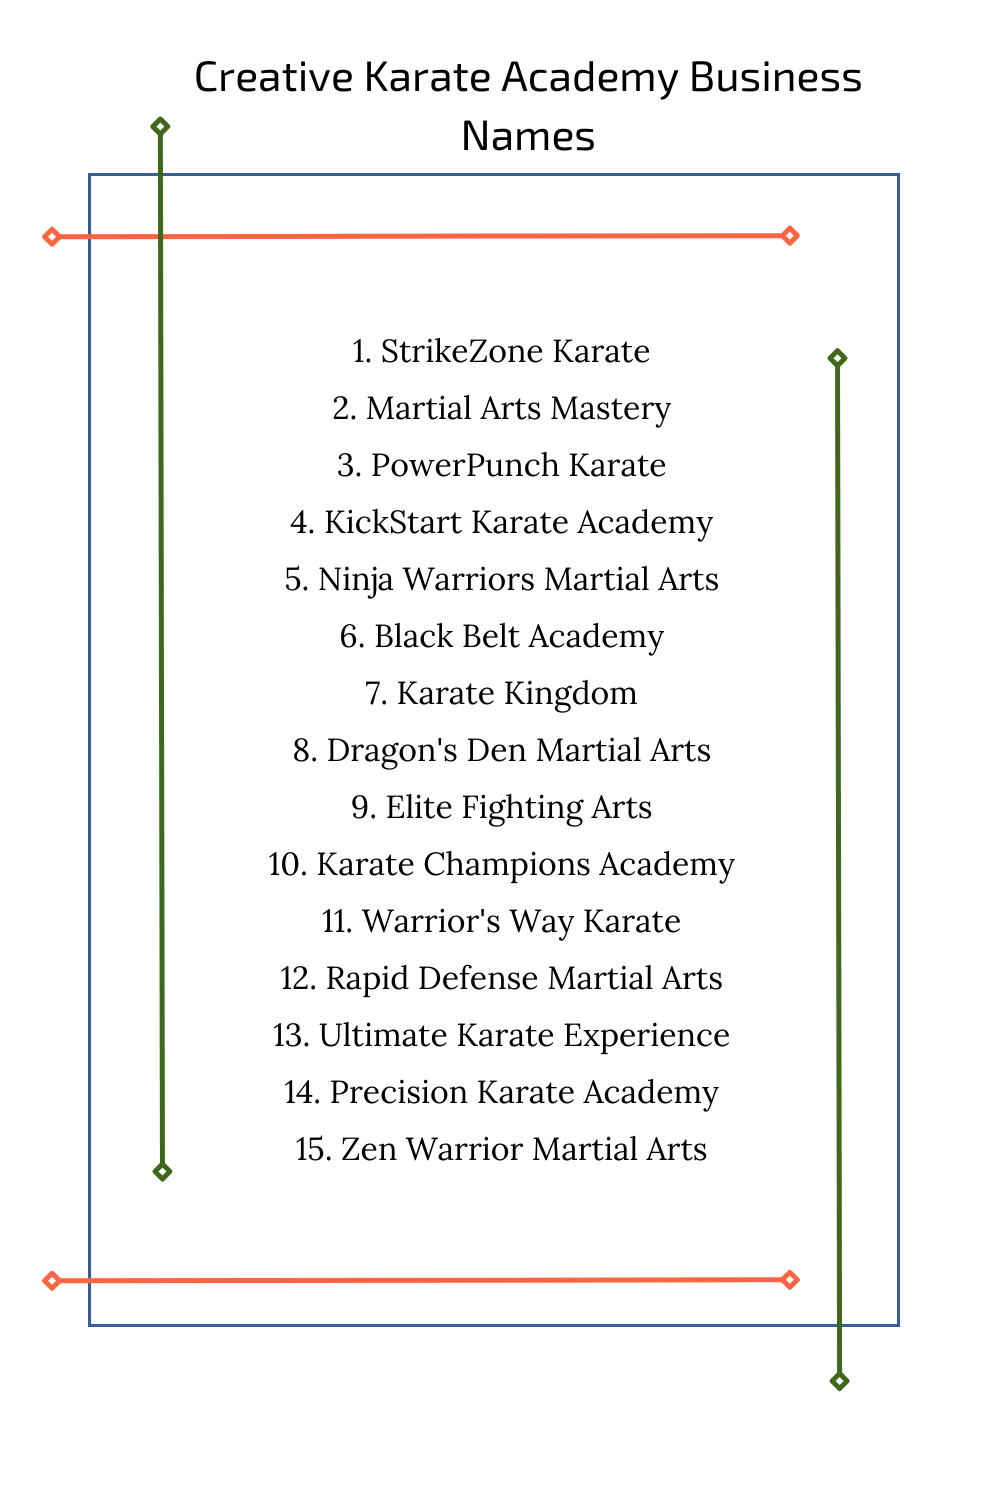 Creative Karate Academy Business Names